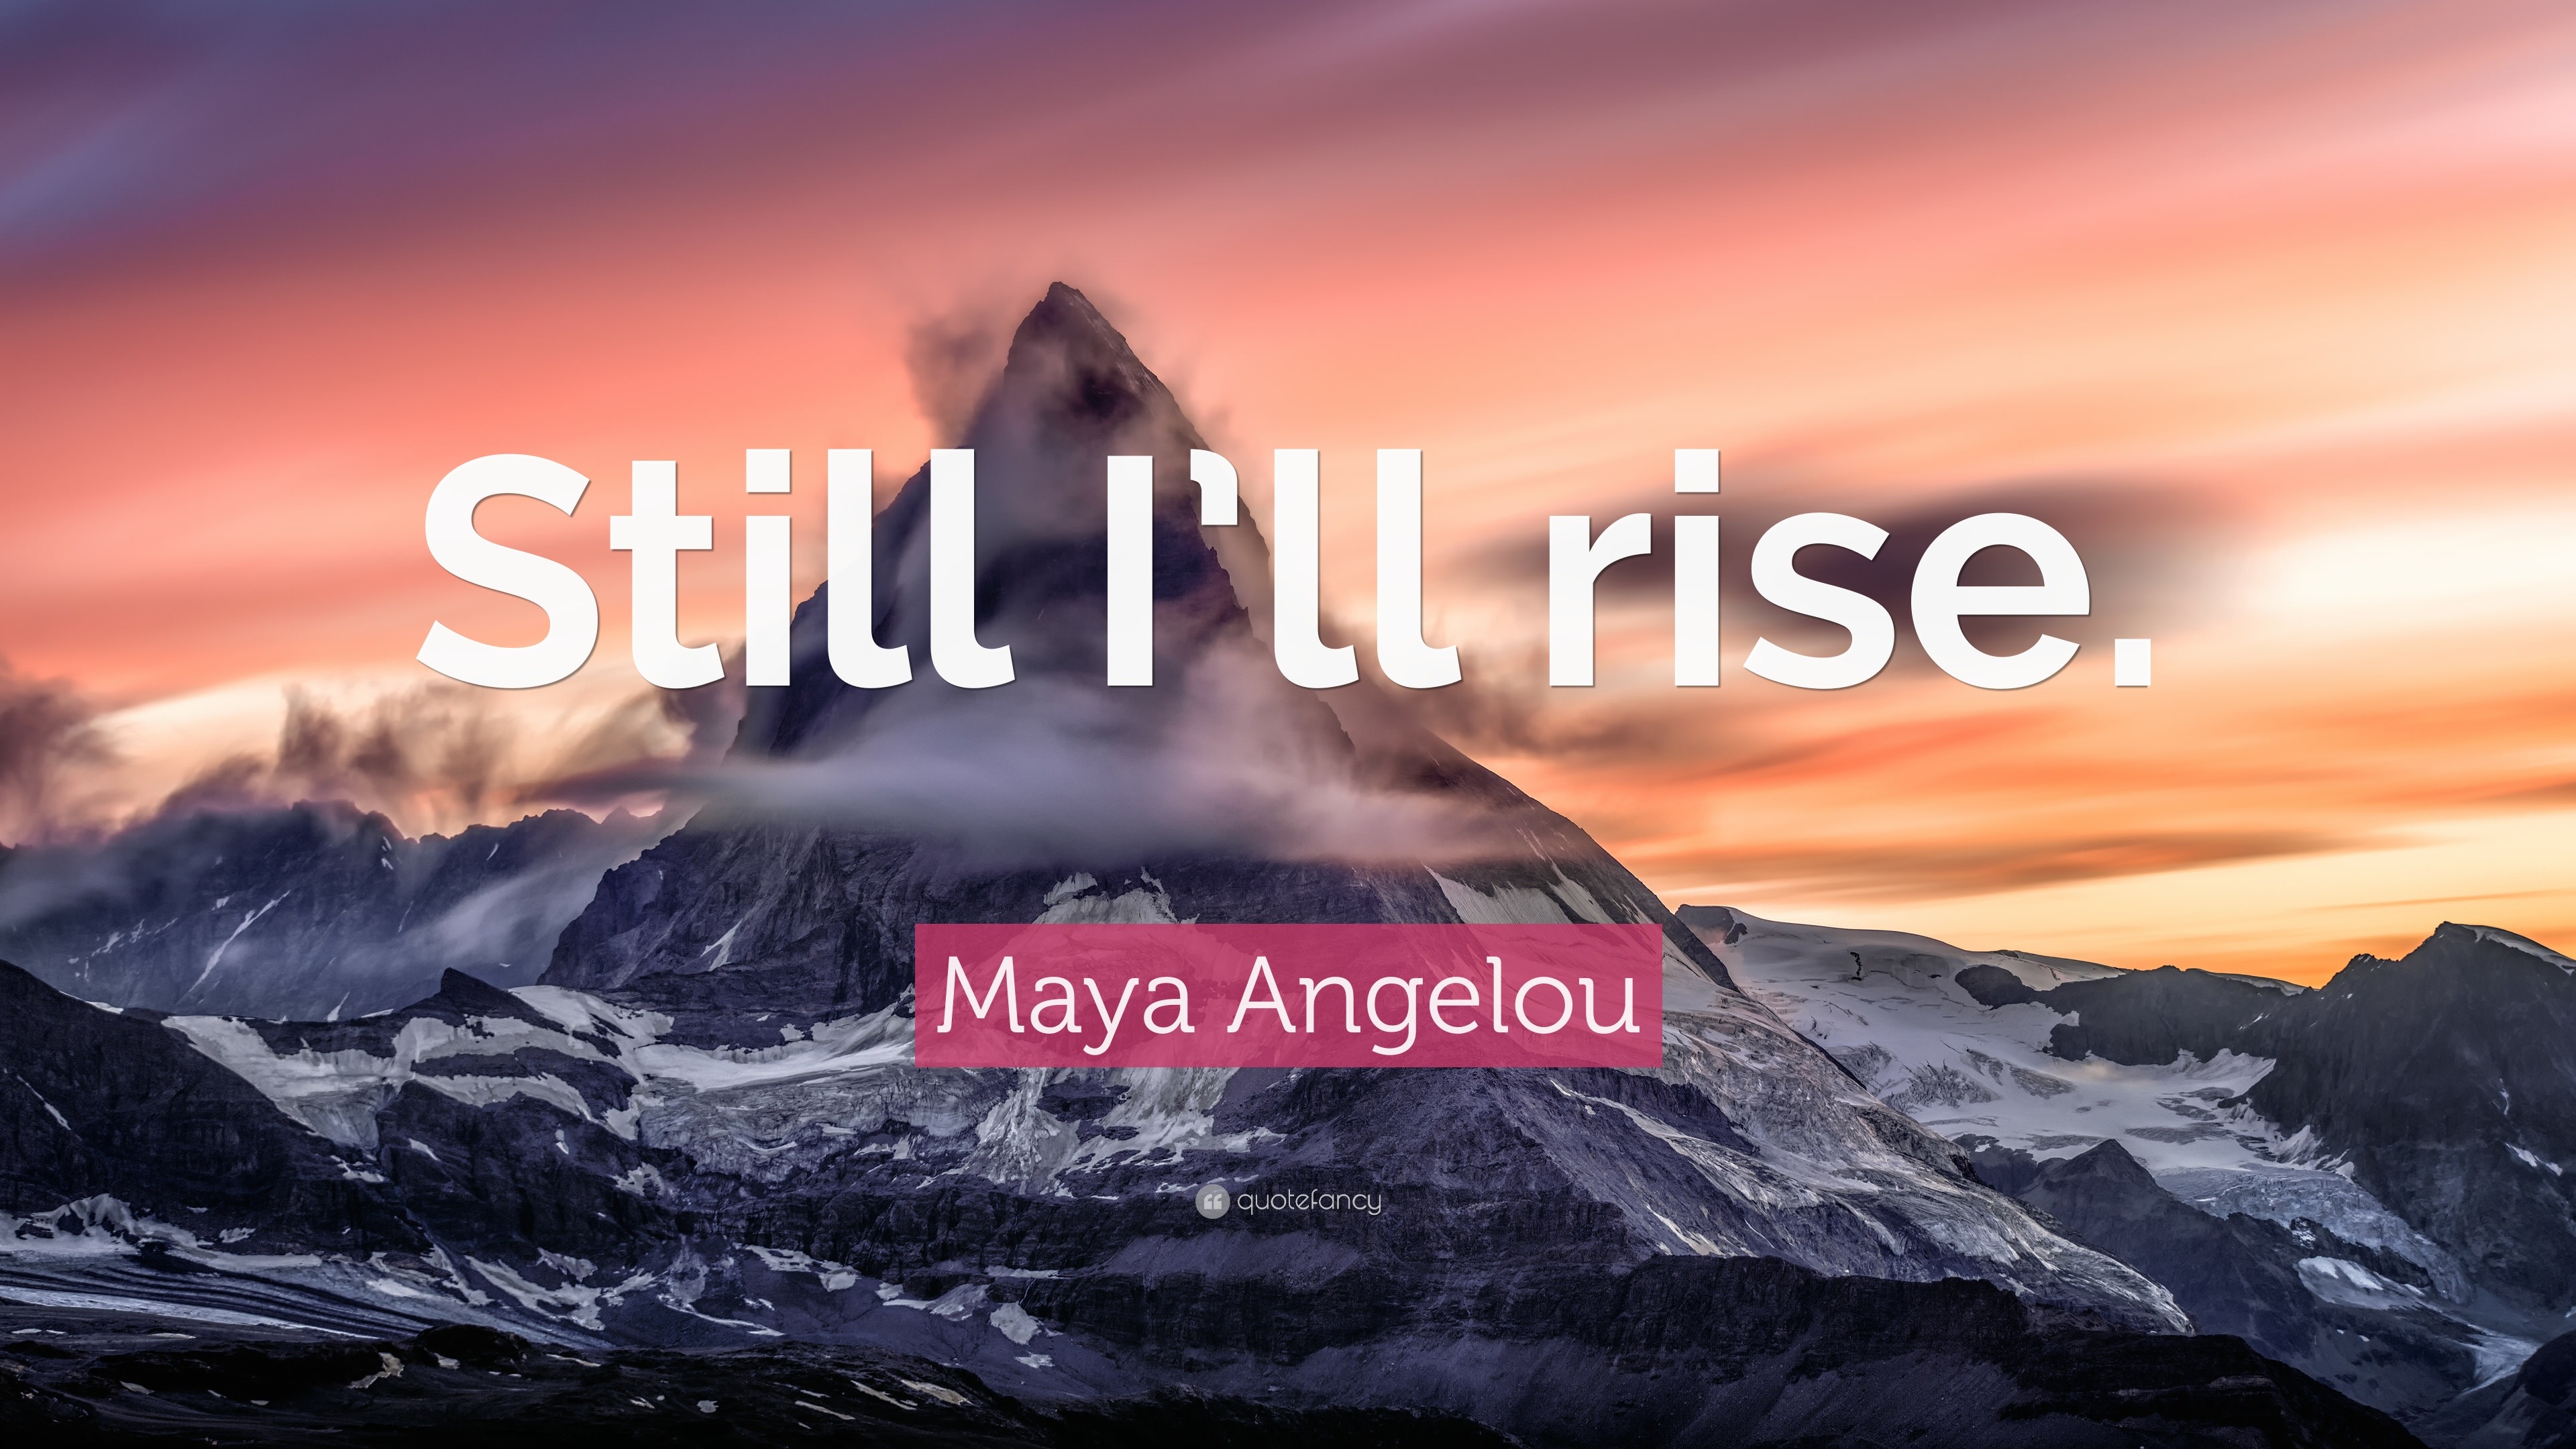 Maya Angelou Quote: “Still I'll rise.”